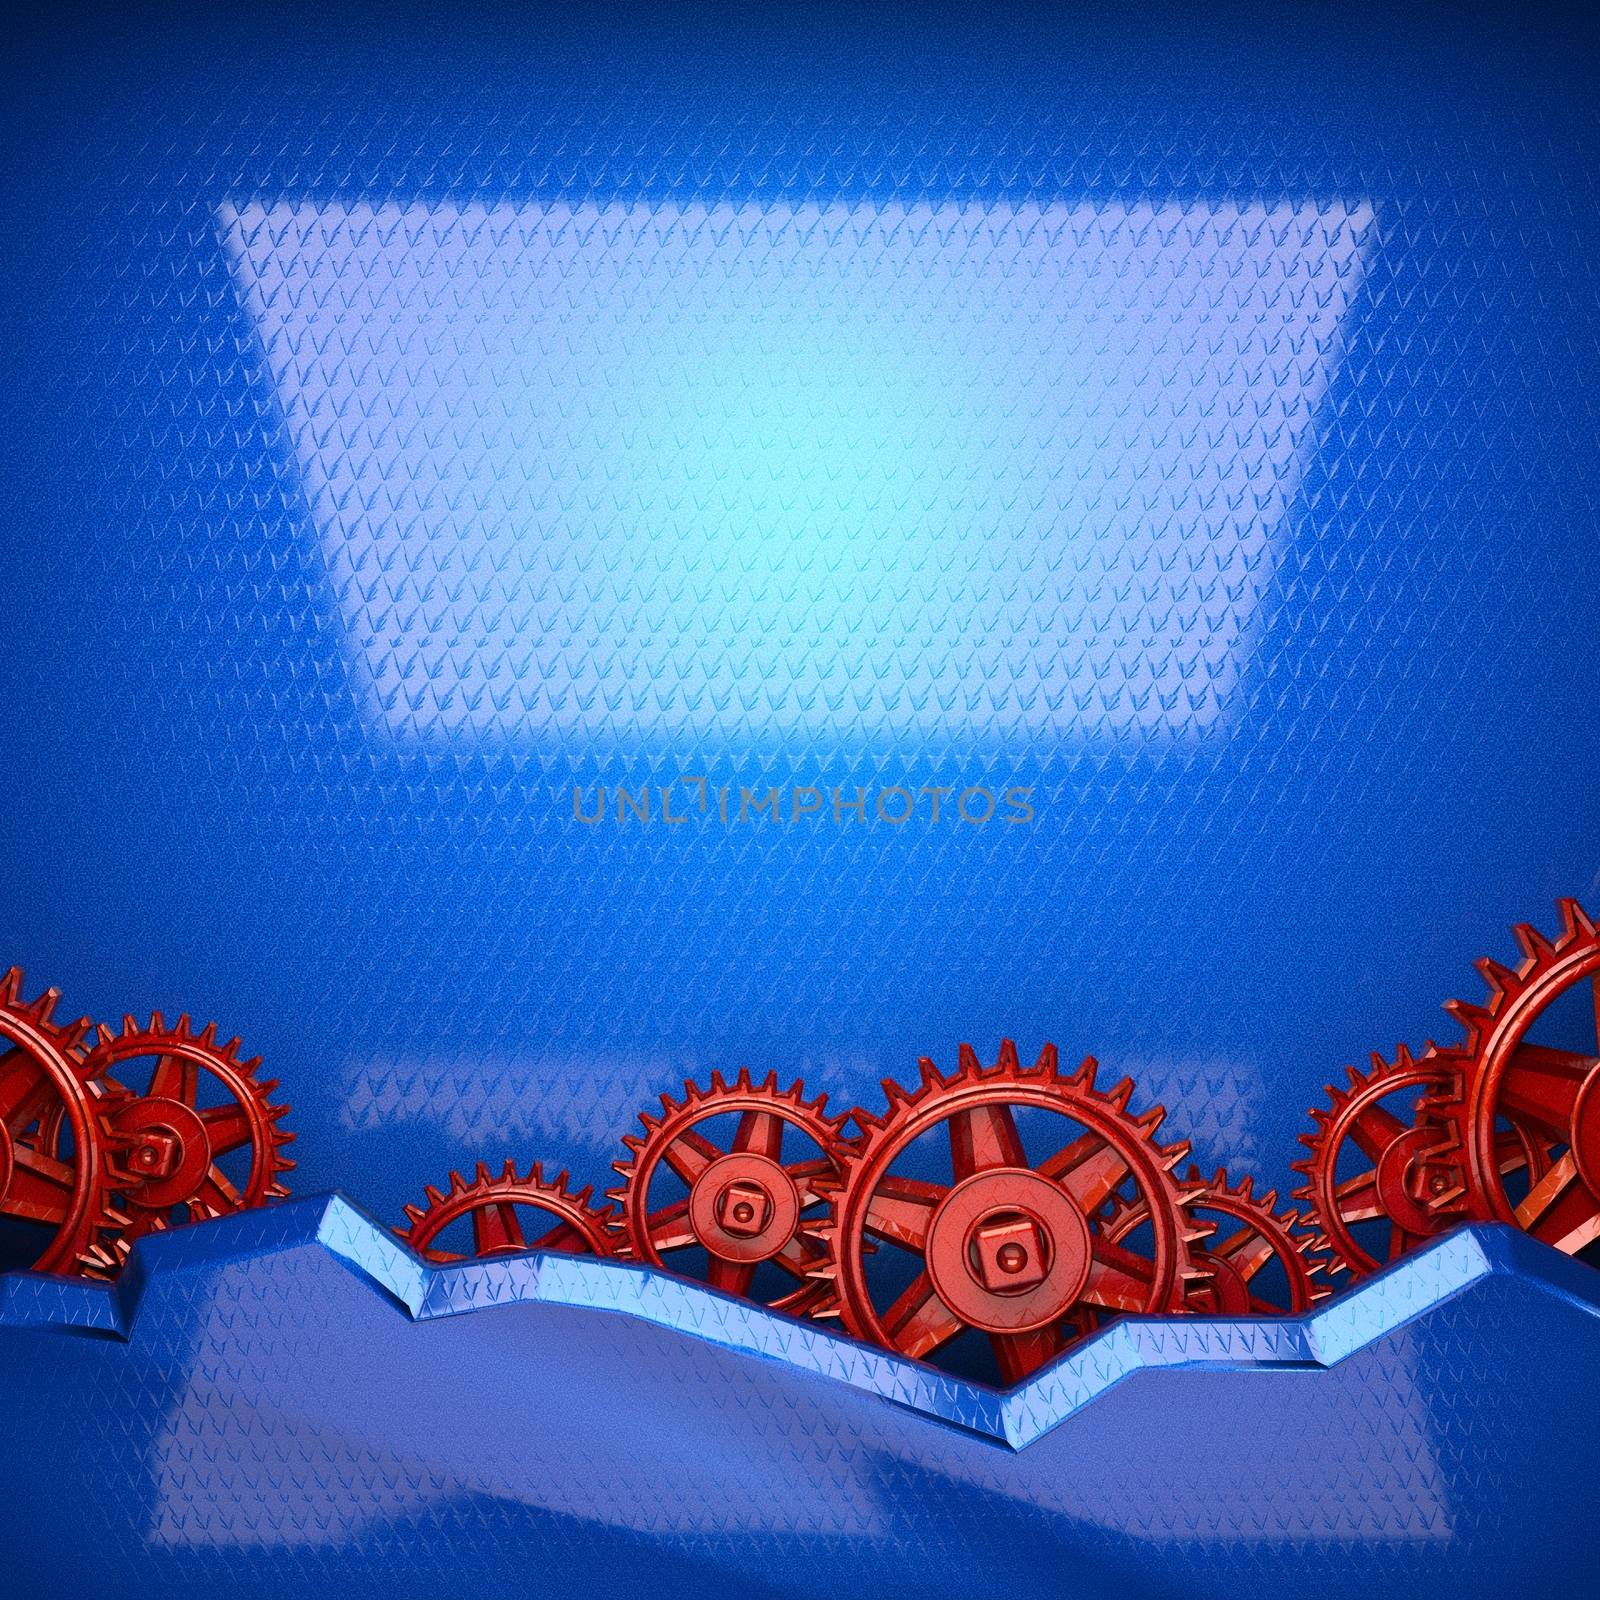 blue metal background with red cogwheel gears by videodoctor